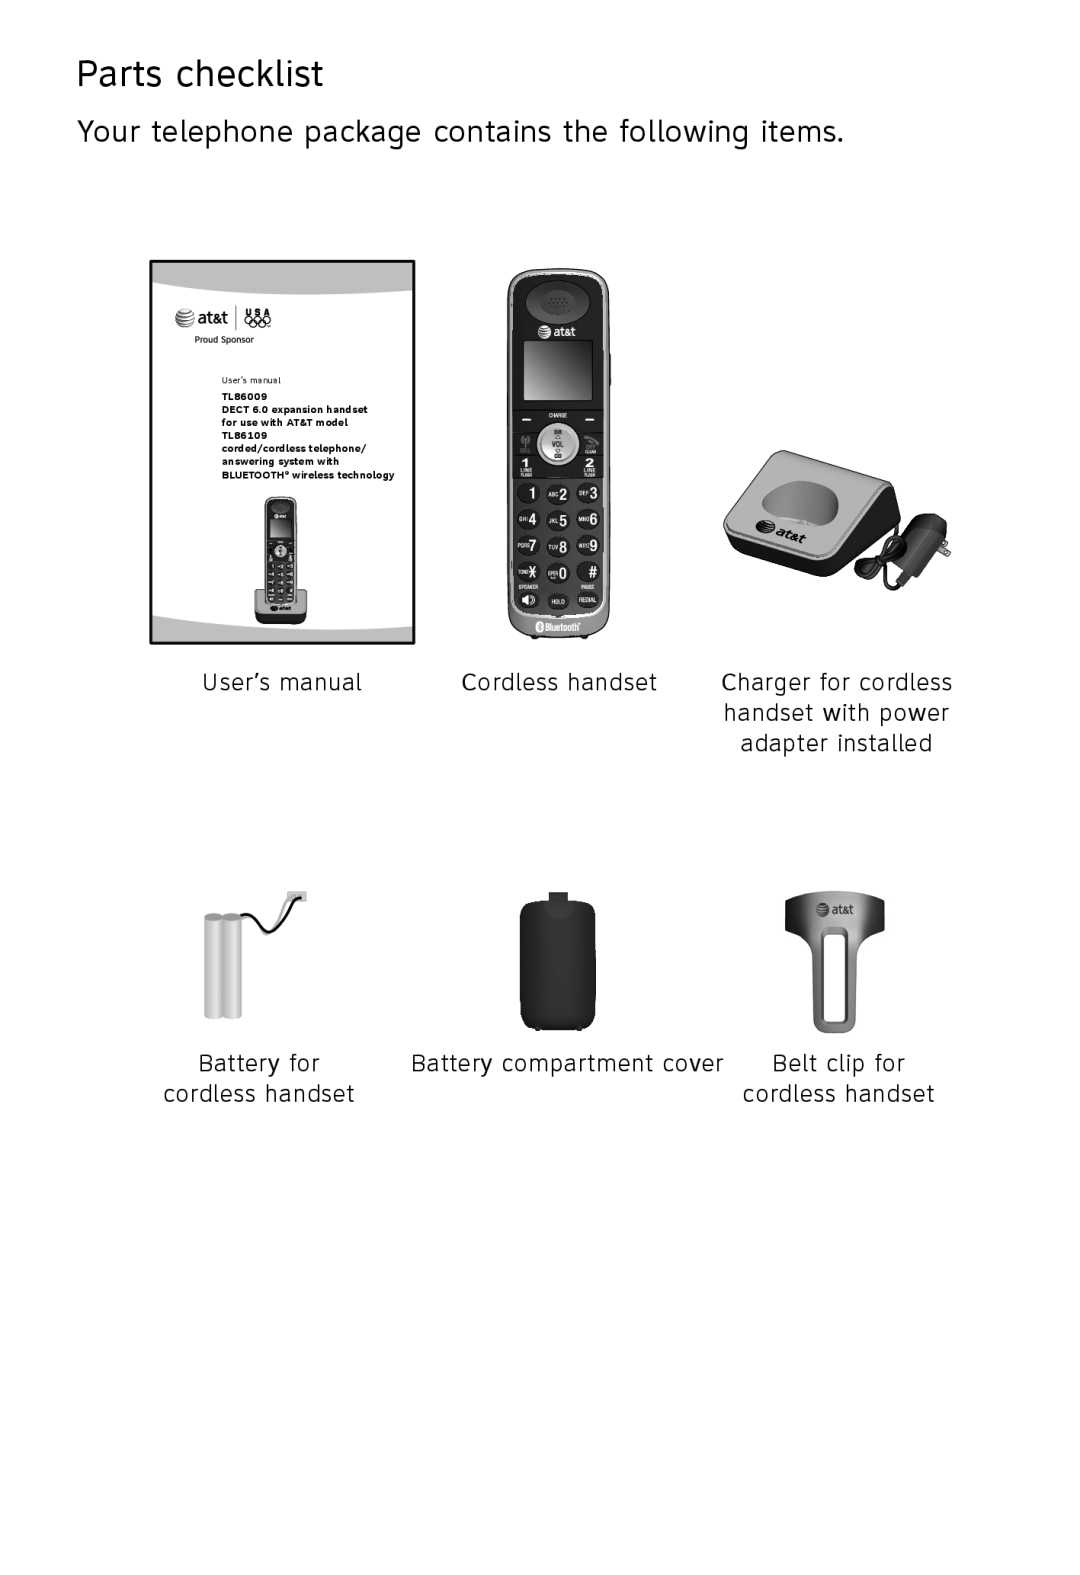 AT&T TL86109, TL 86009 Parts checklist, Charger for cordless, handset with power, Battery for, cordless handset, TL86009 